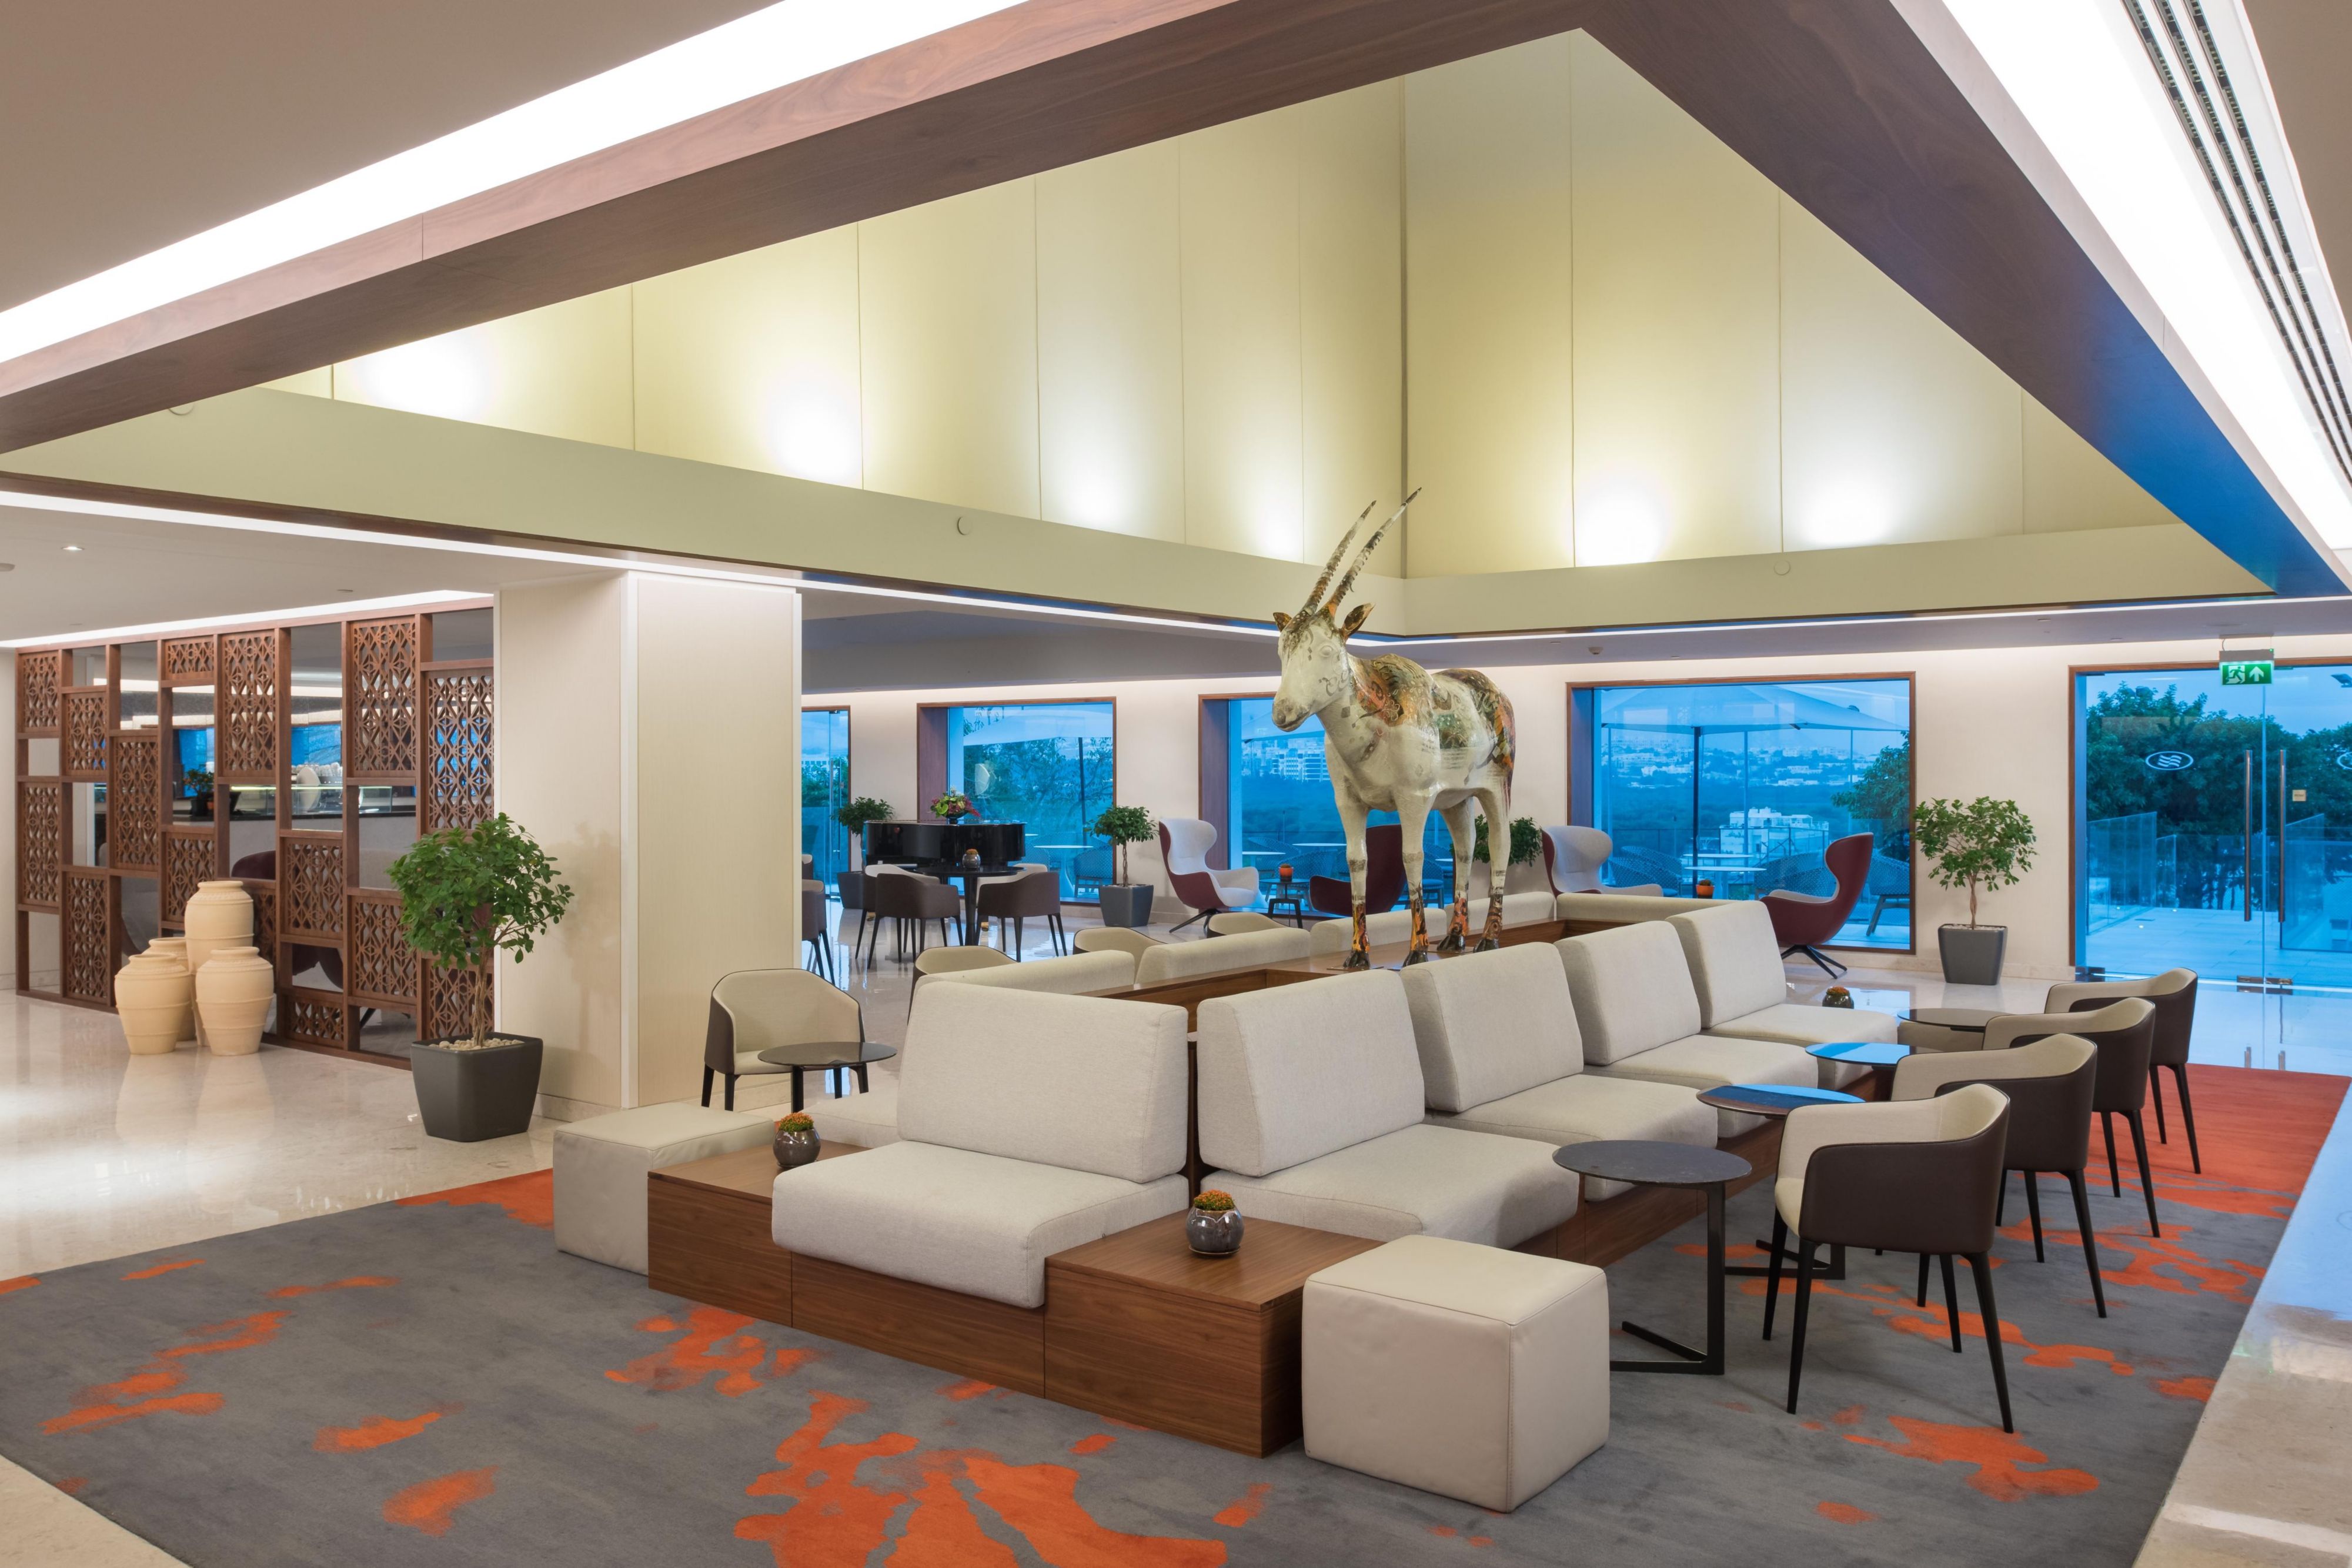 Modern, contemporary lobby lounge